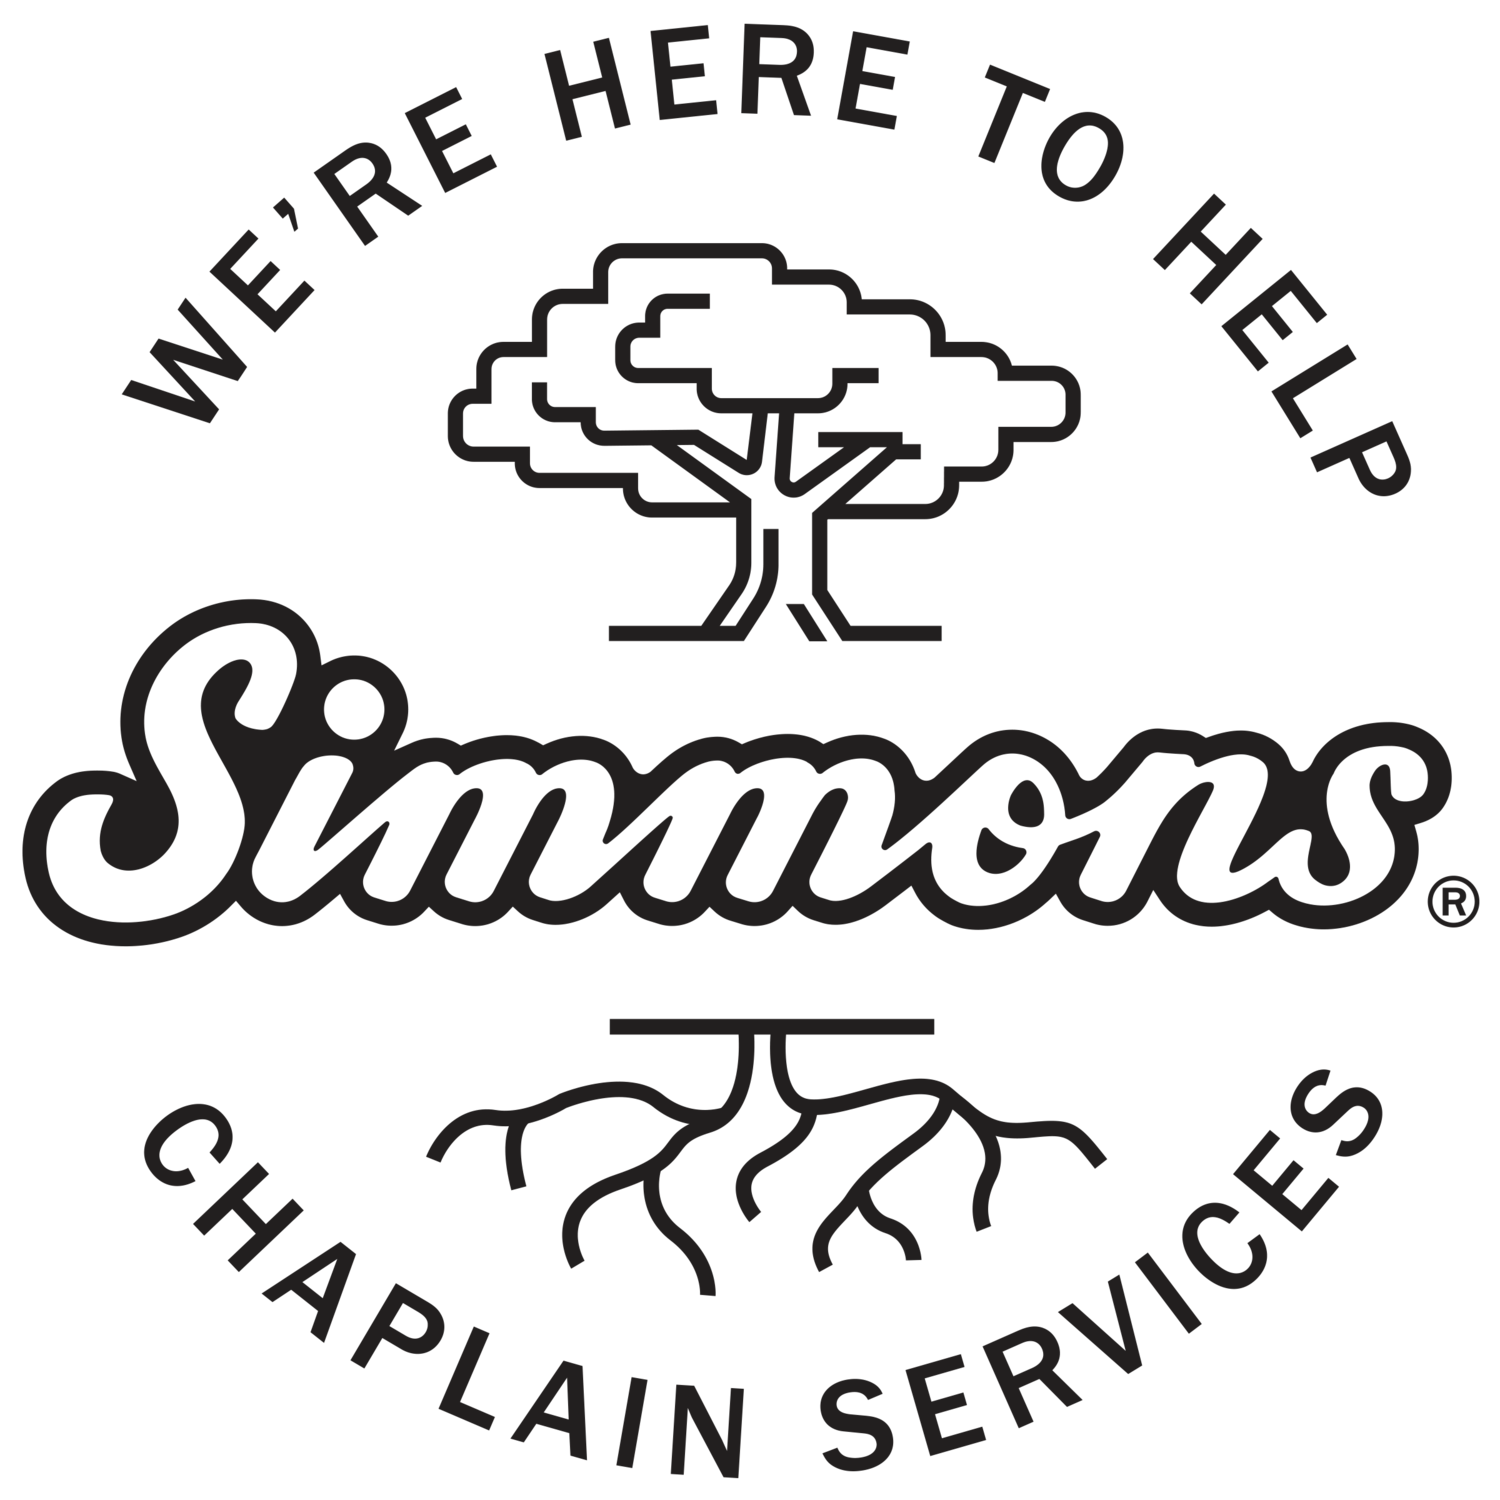 Simmons Chaplain Services